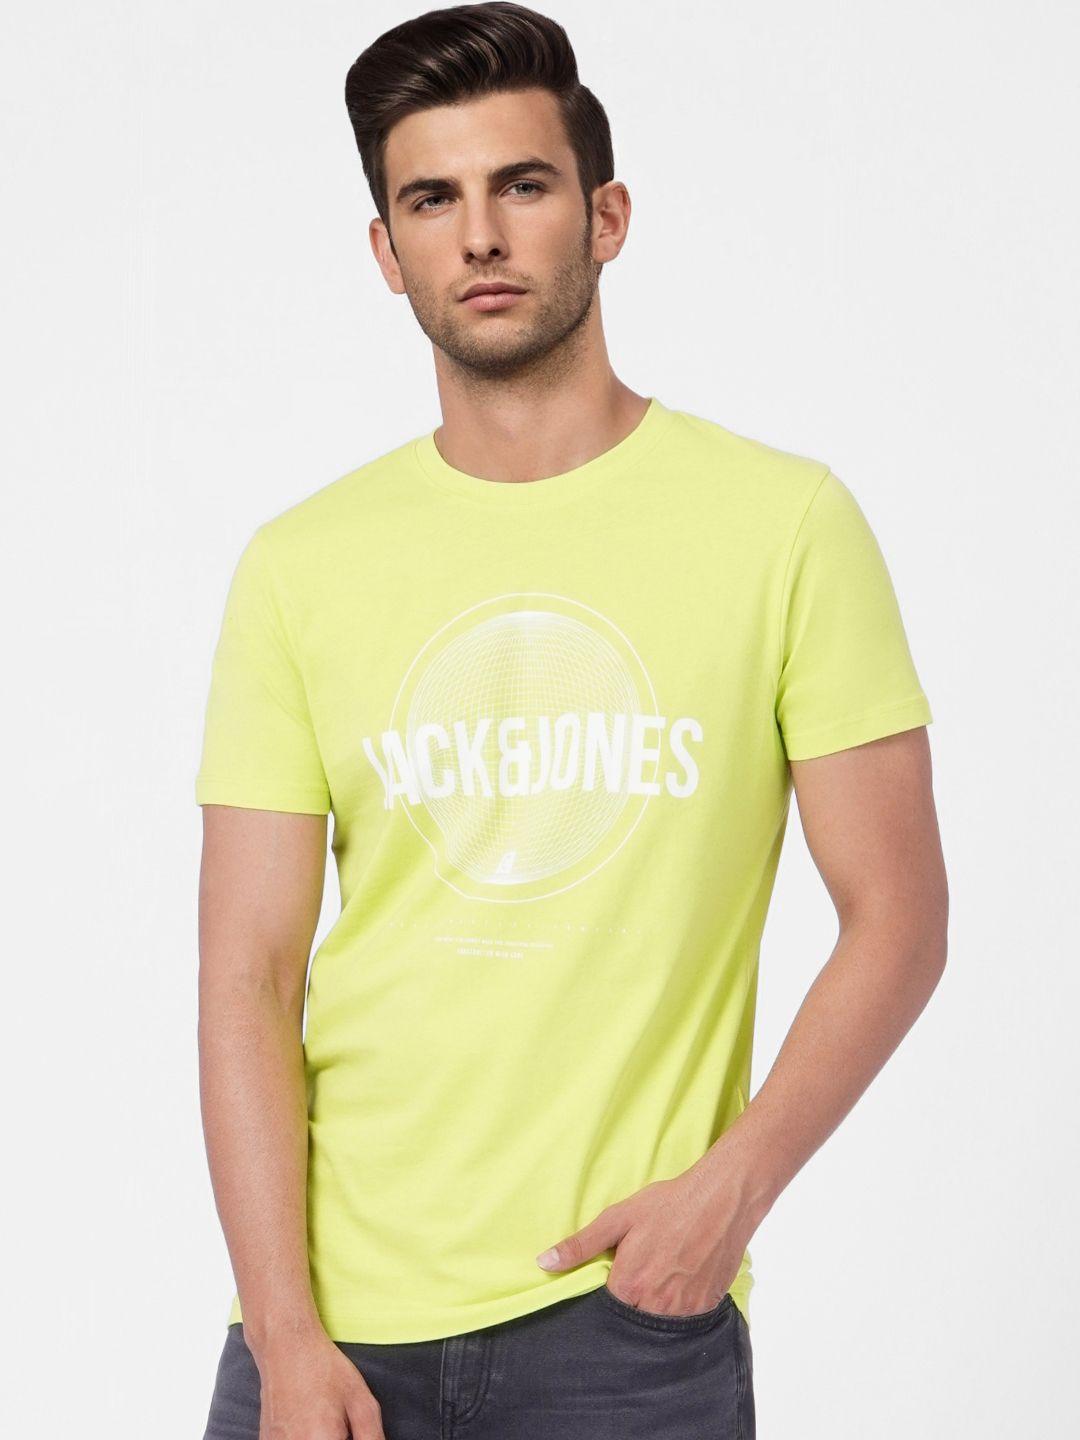 jack & jones men lime green & white typography printed pure cotton slim fit t-shirt